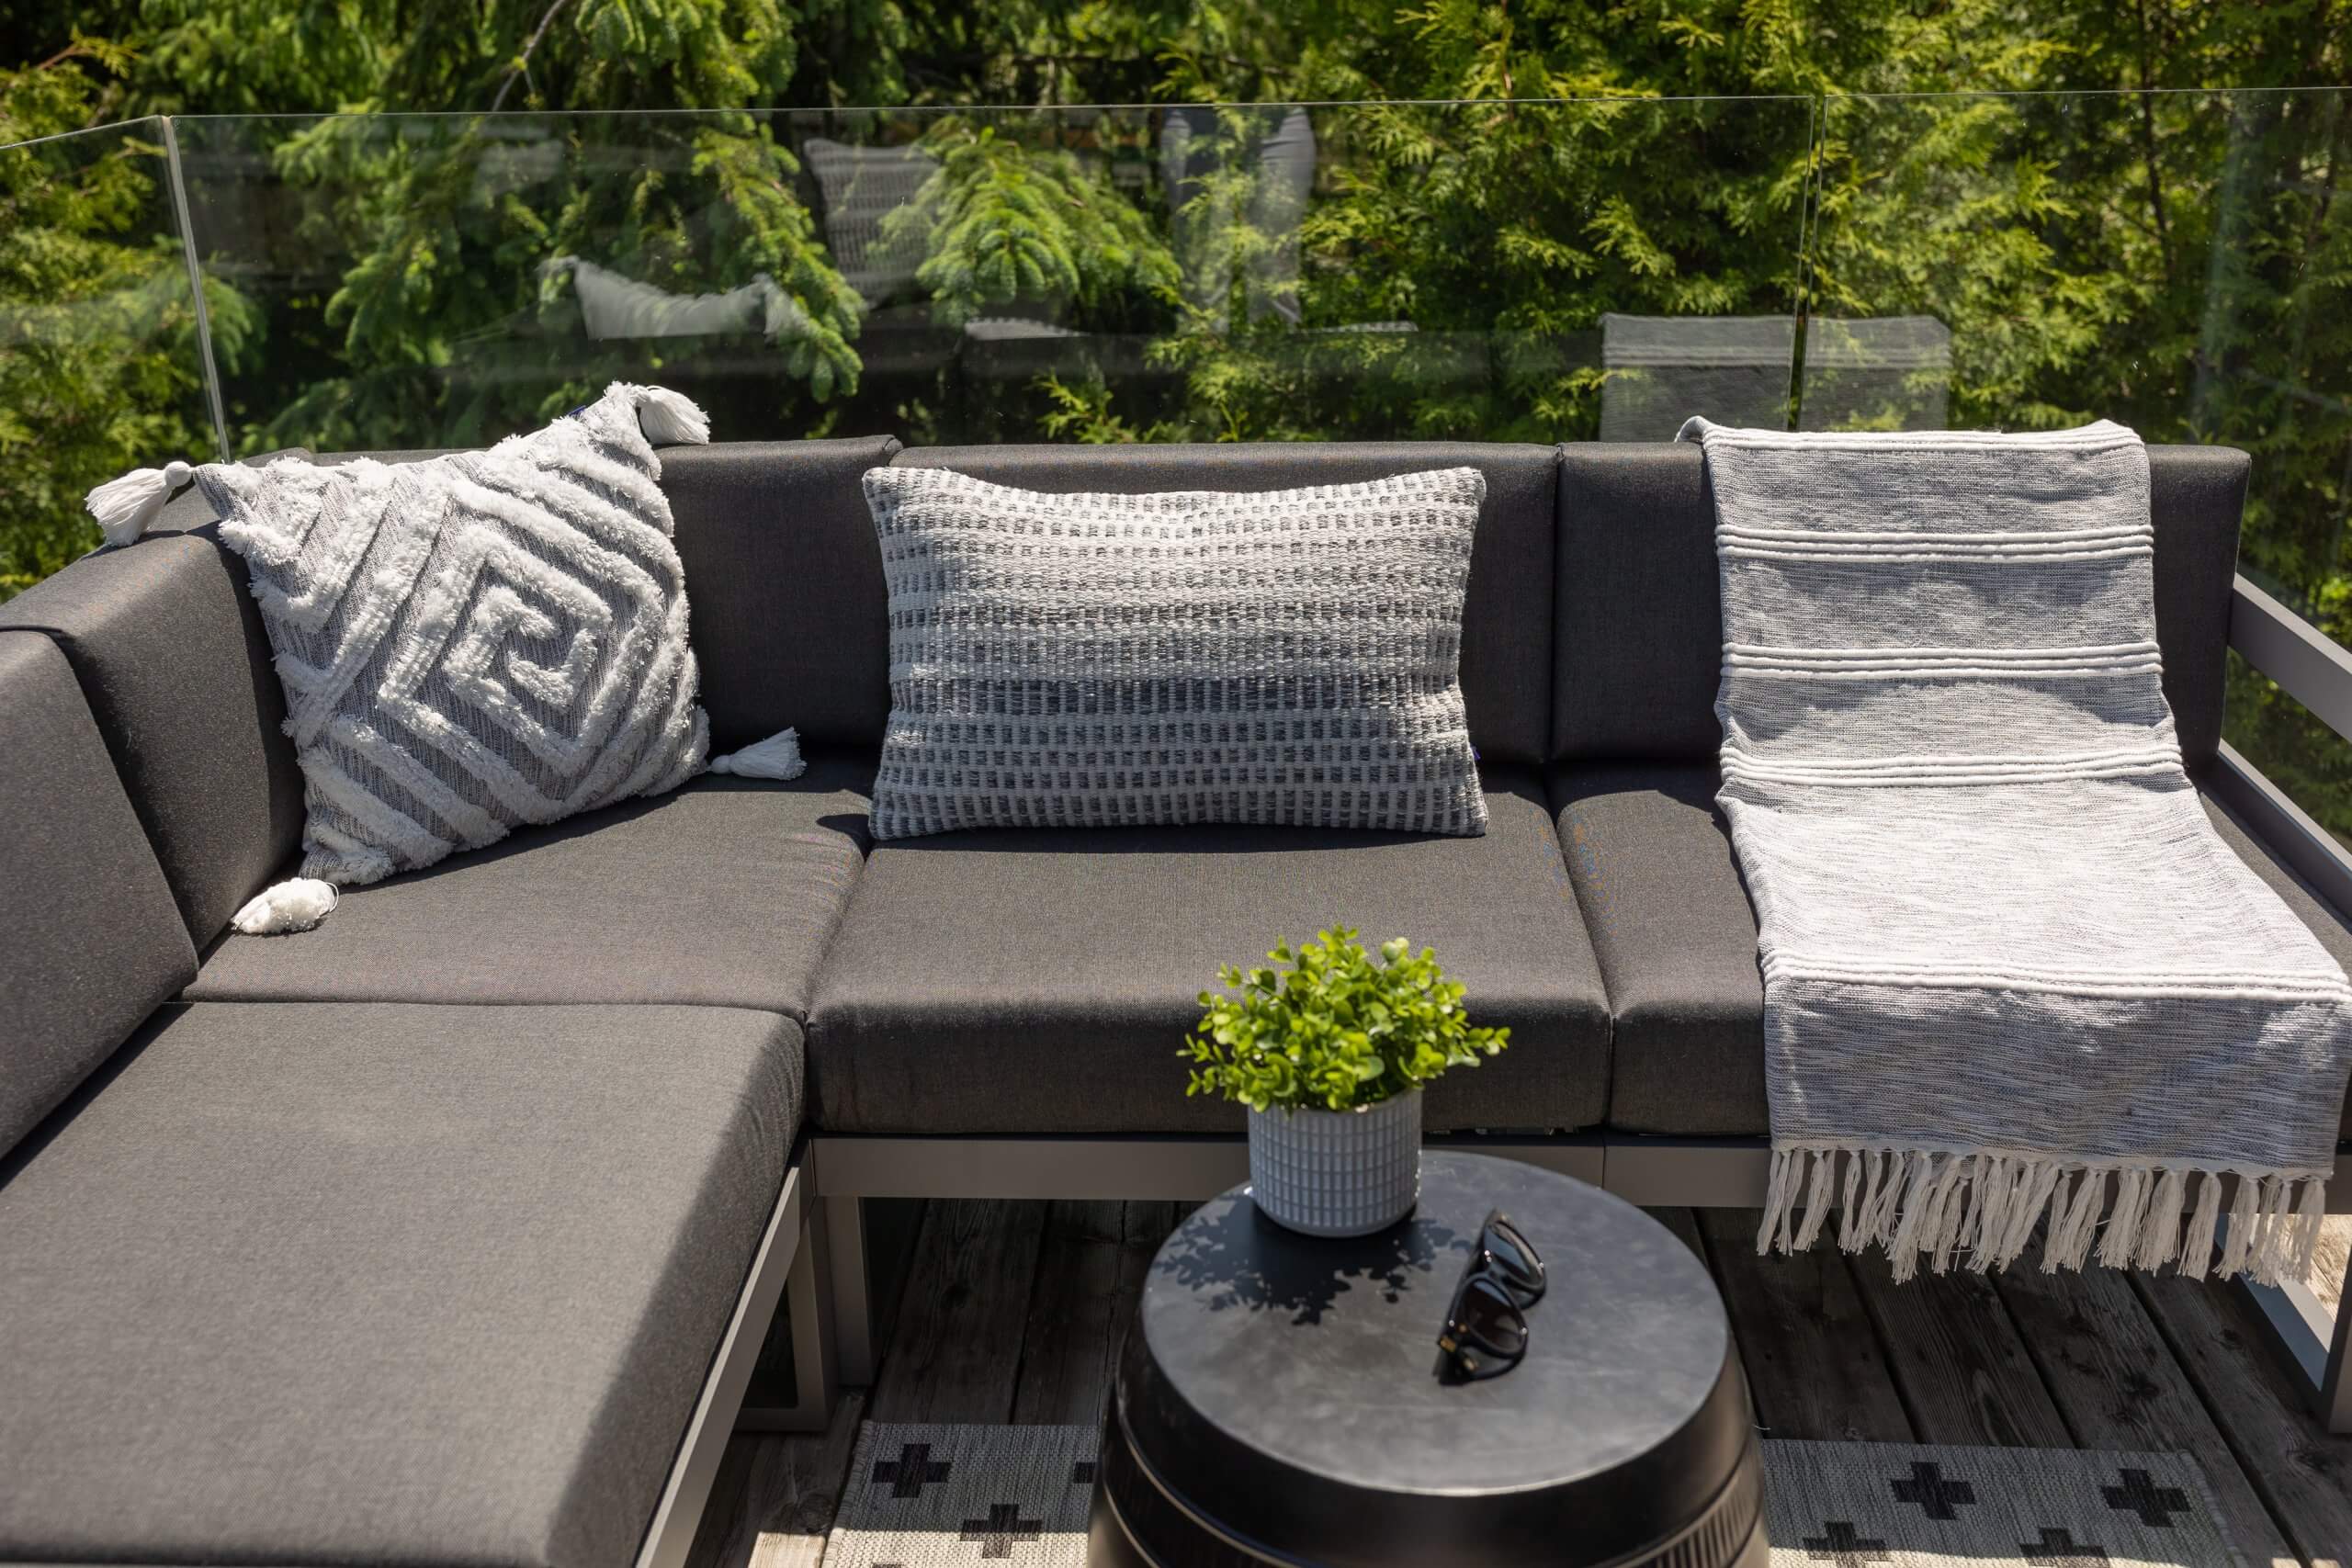 Backyard Entertaining with Cozey; sparkleshinylove cozey outdoor furniture